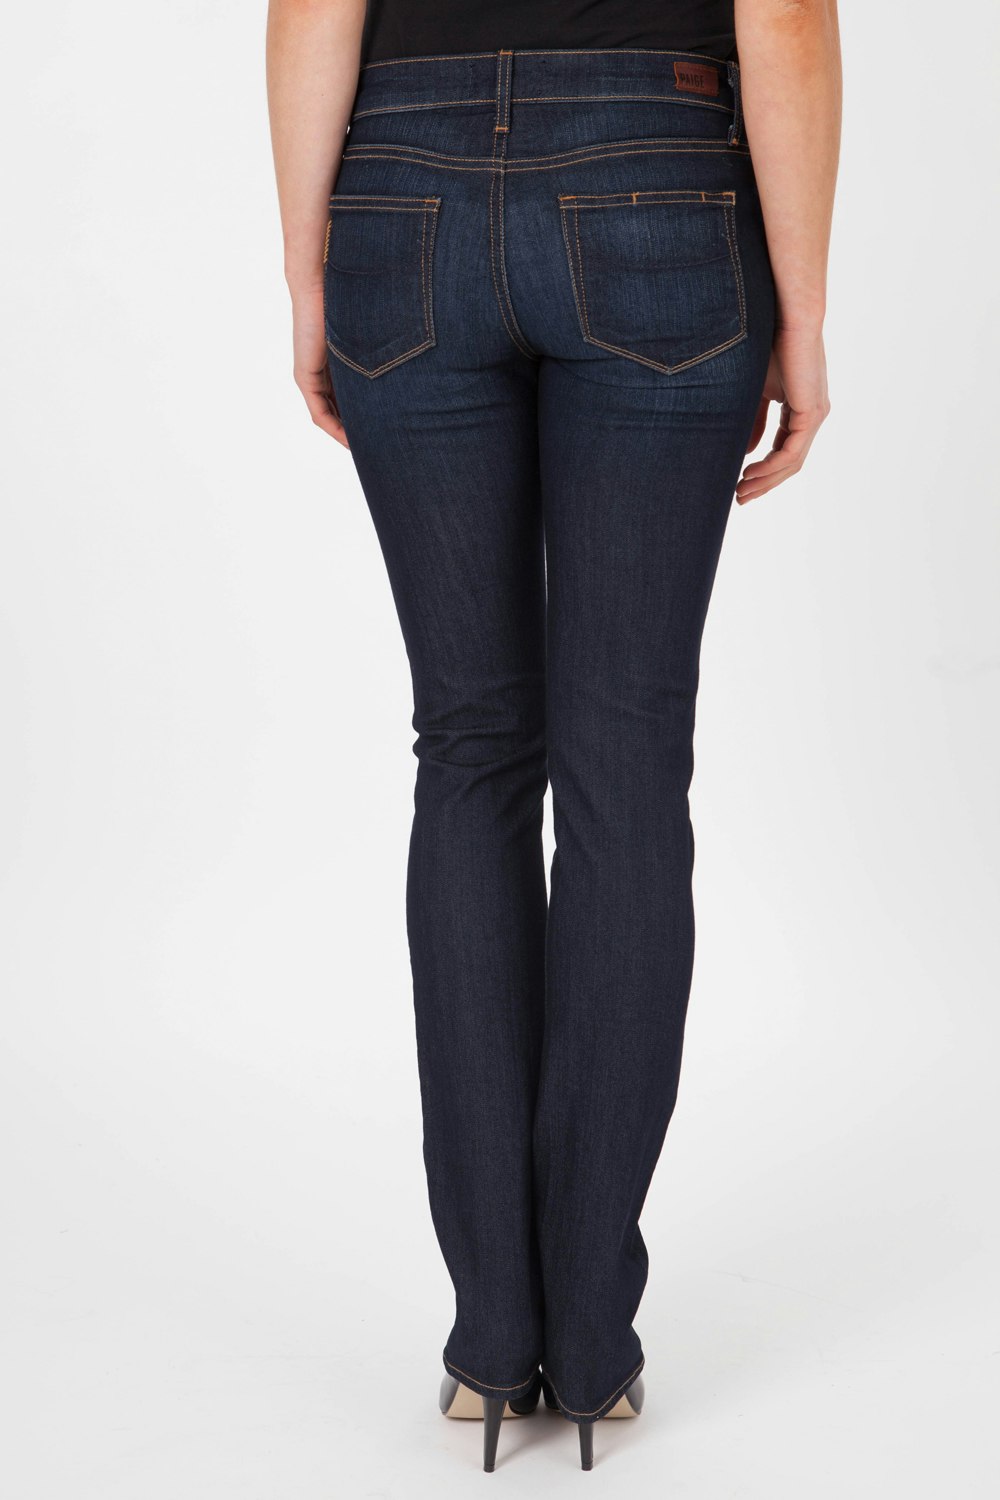 Paige Skyline Straight Jean - Womens Straight Jeans - Birdsnest Online ...